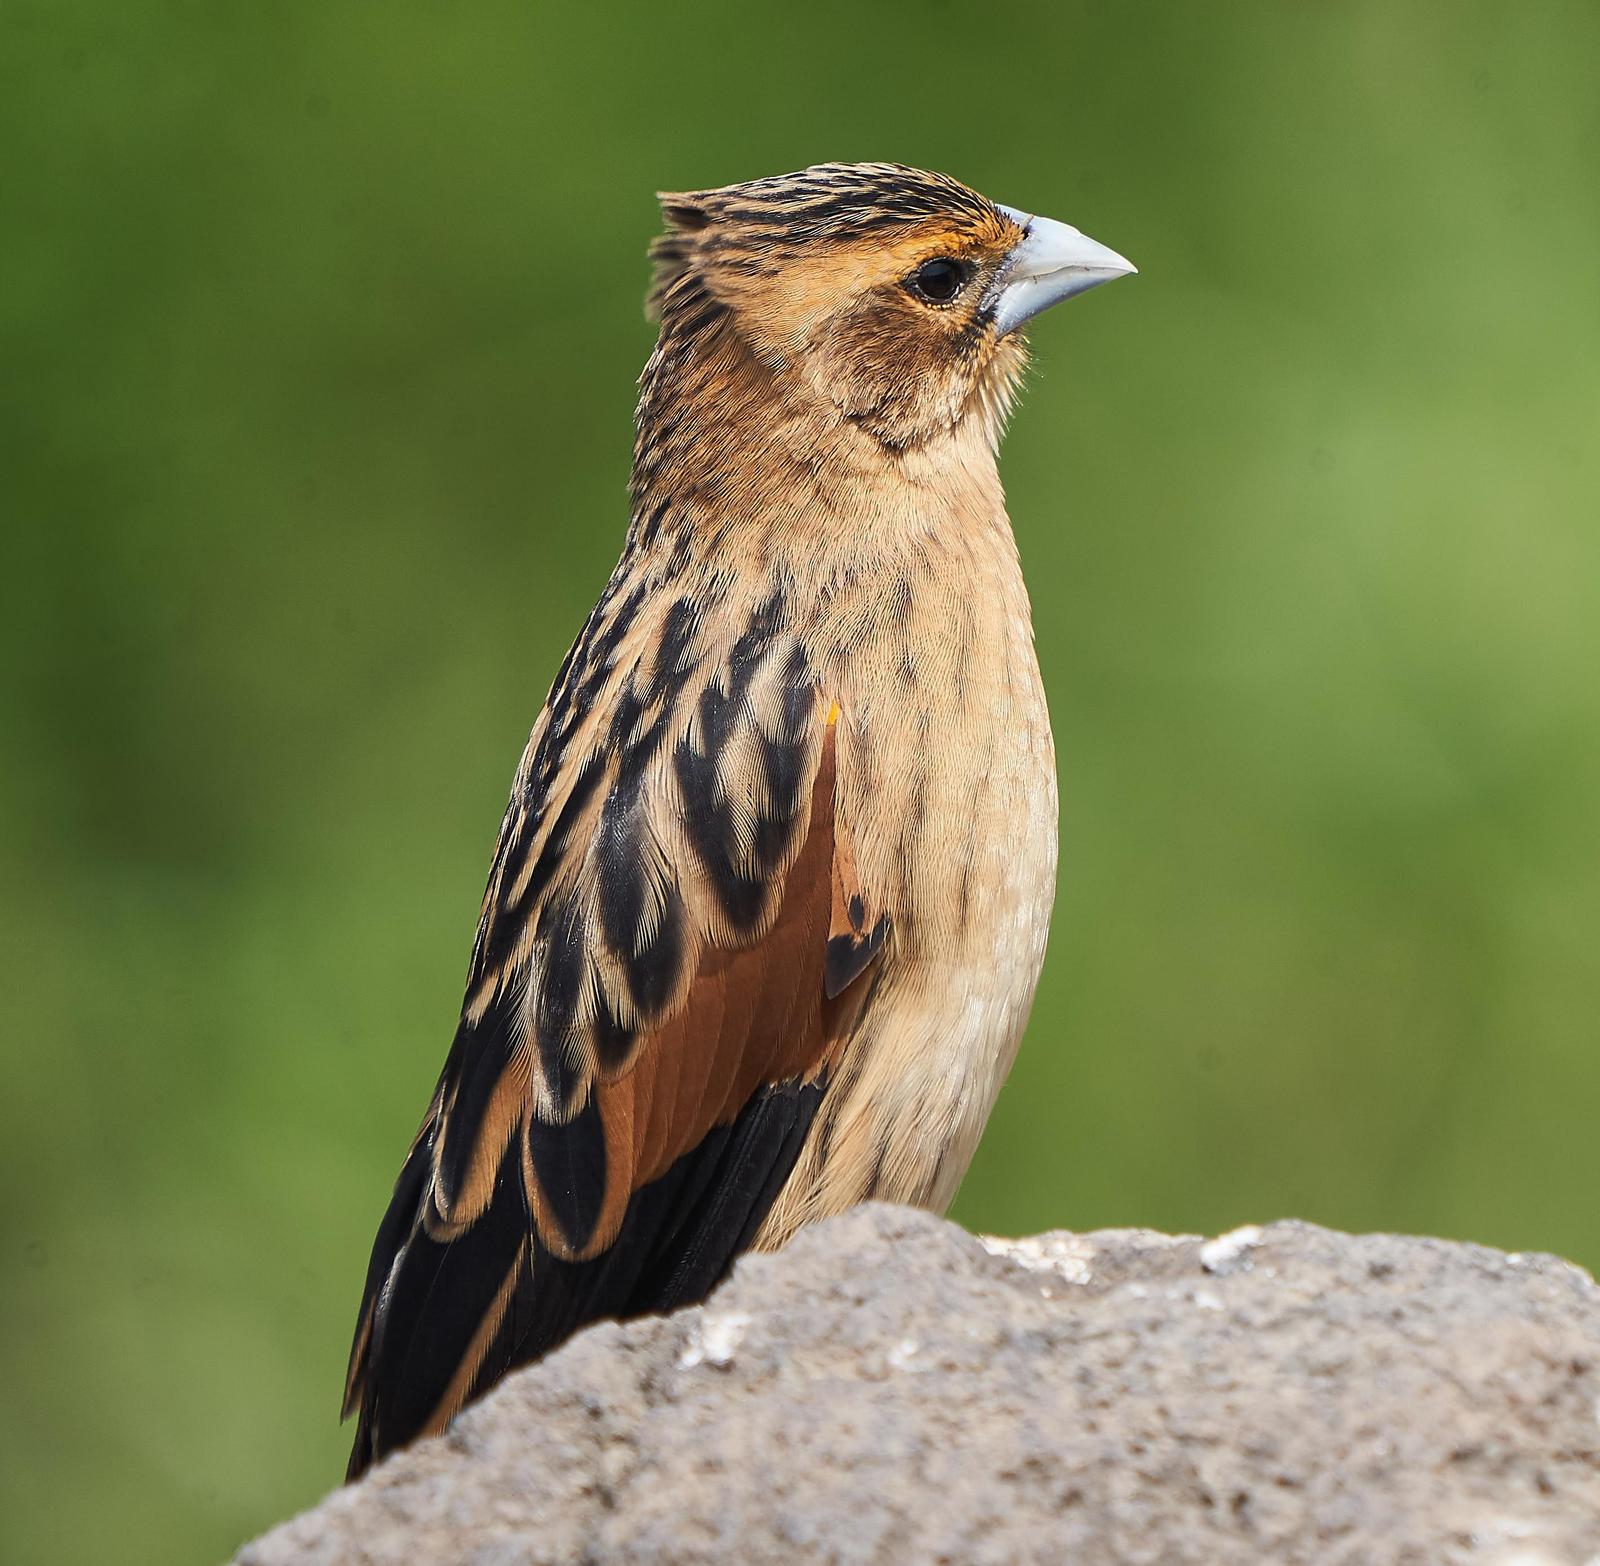 Fan-tailed Widowbird Photo by Steven Cheong